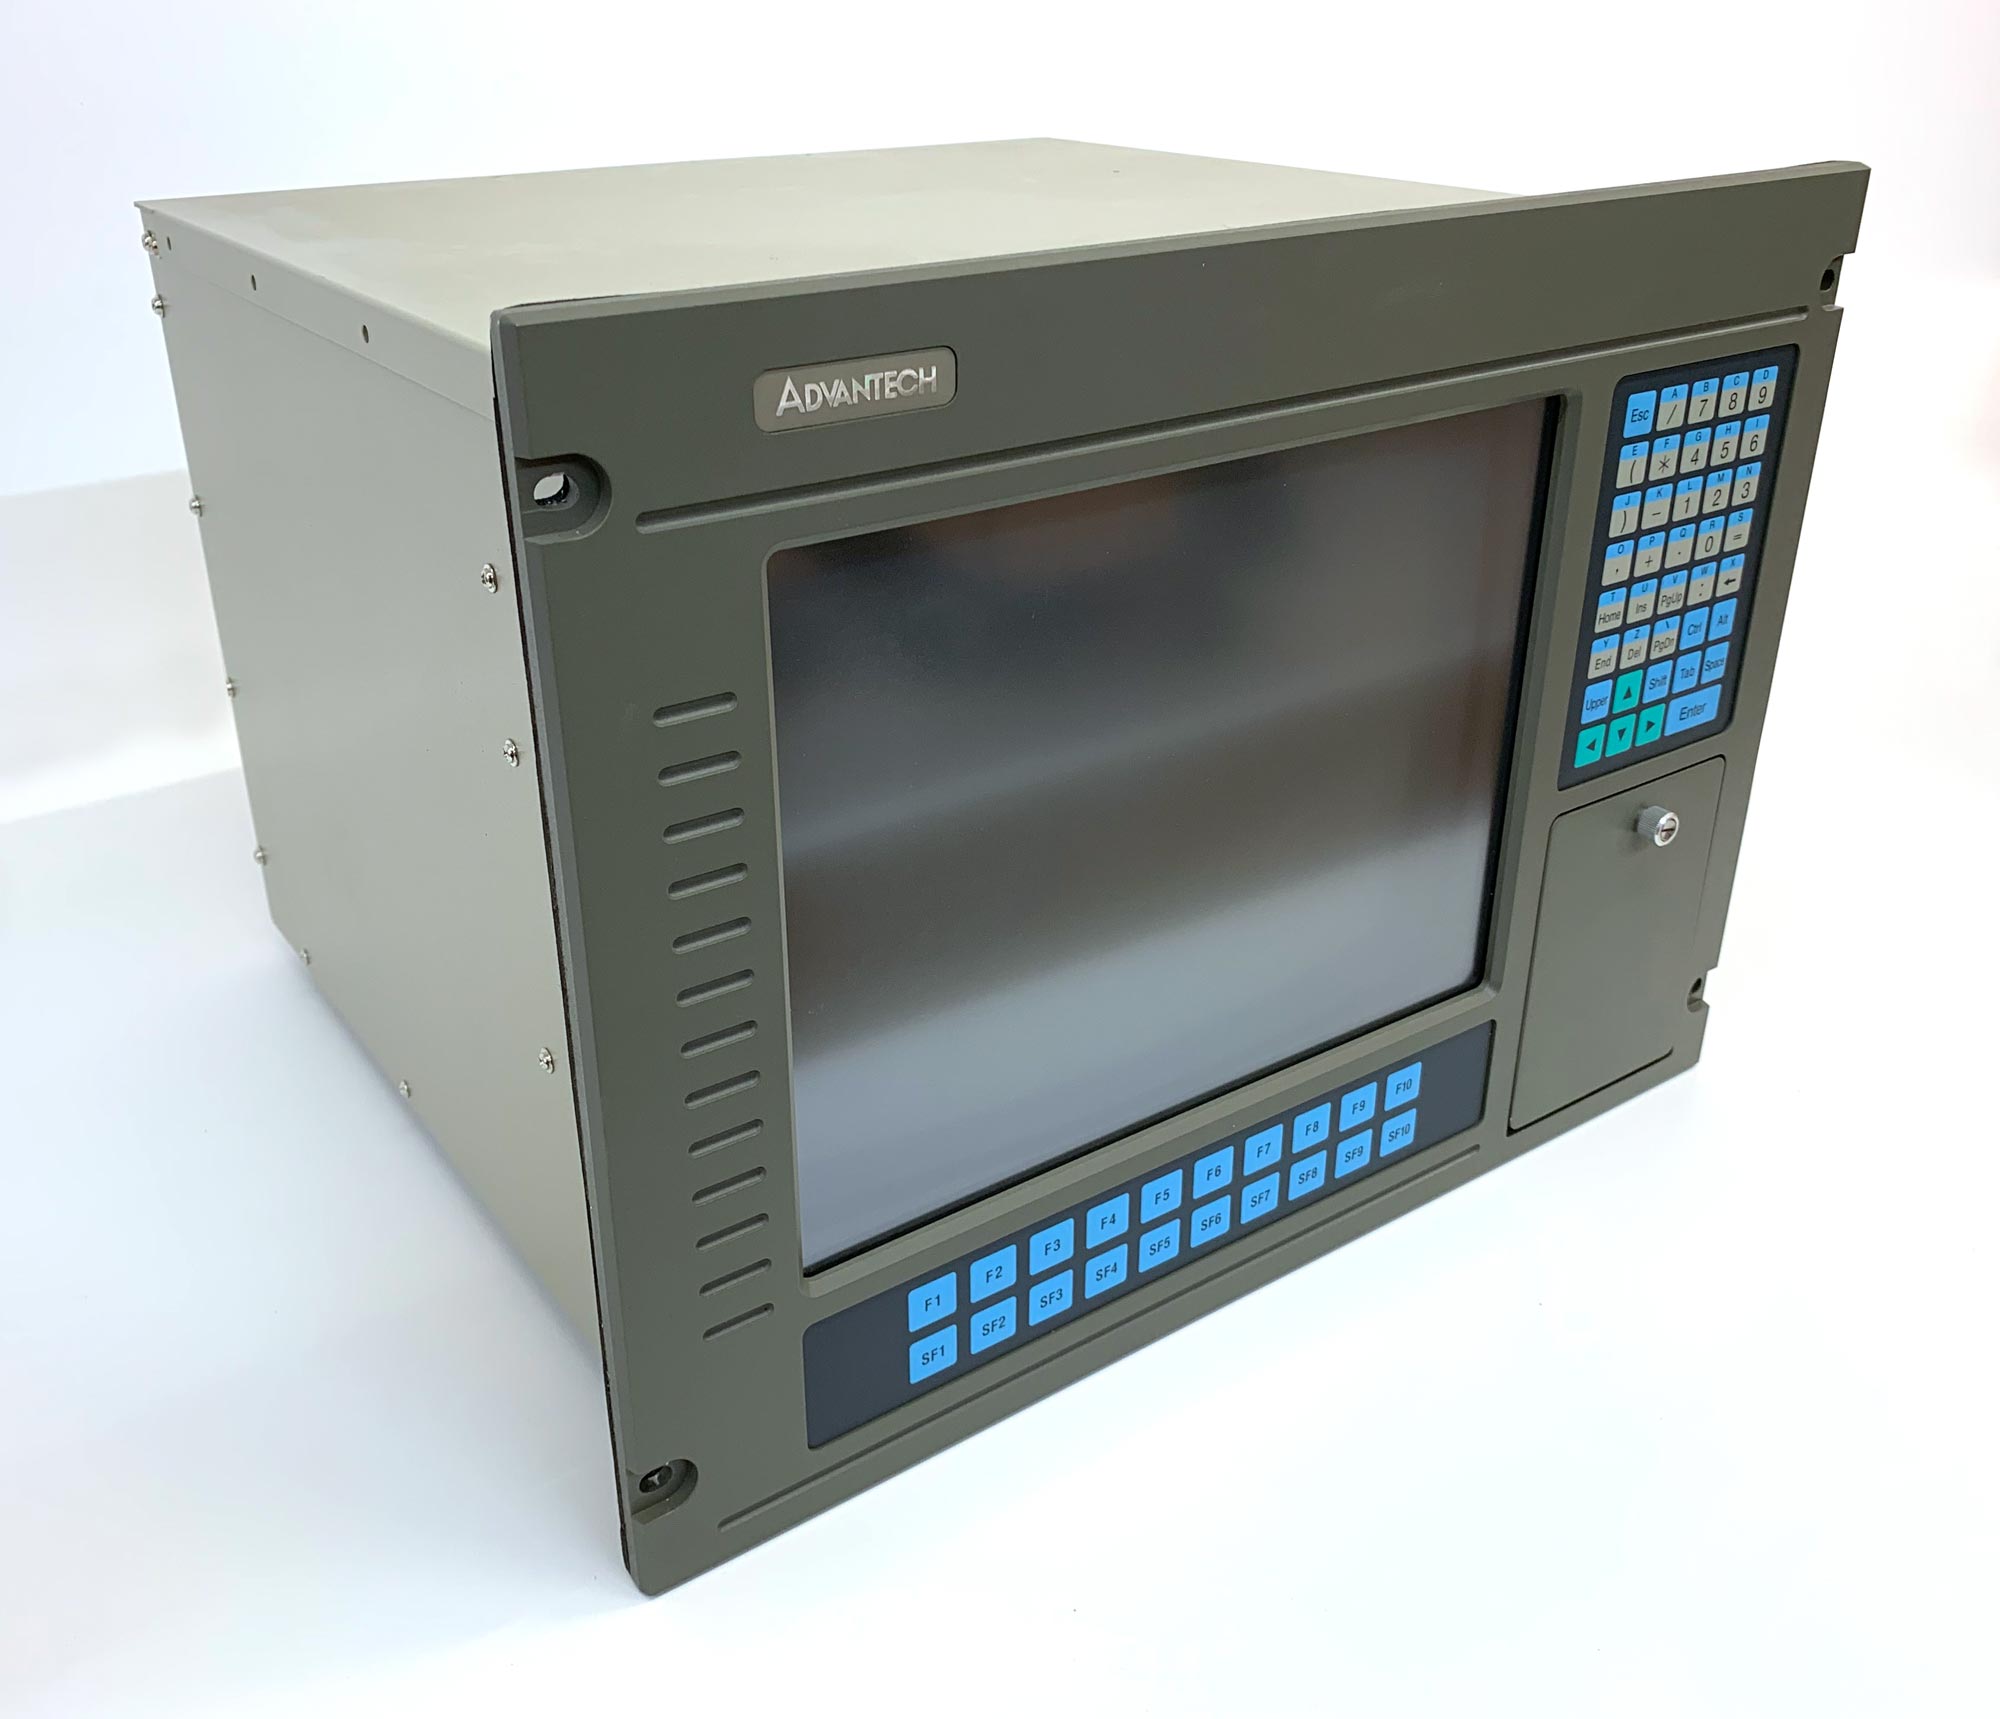 AWS-825-T - Industrie Workstation mit 15" CRT Display